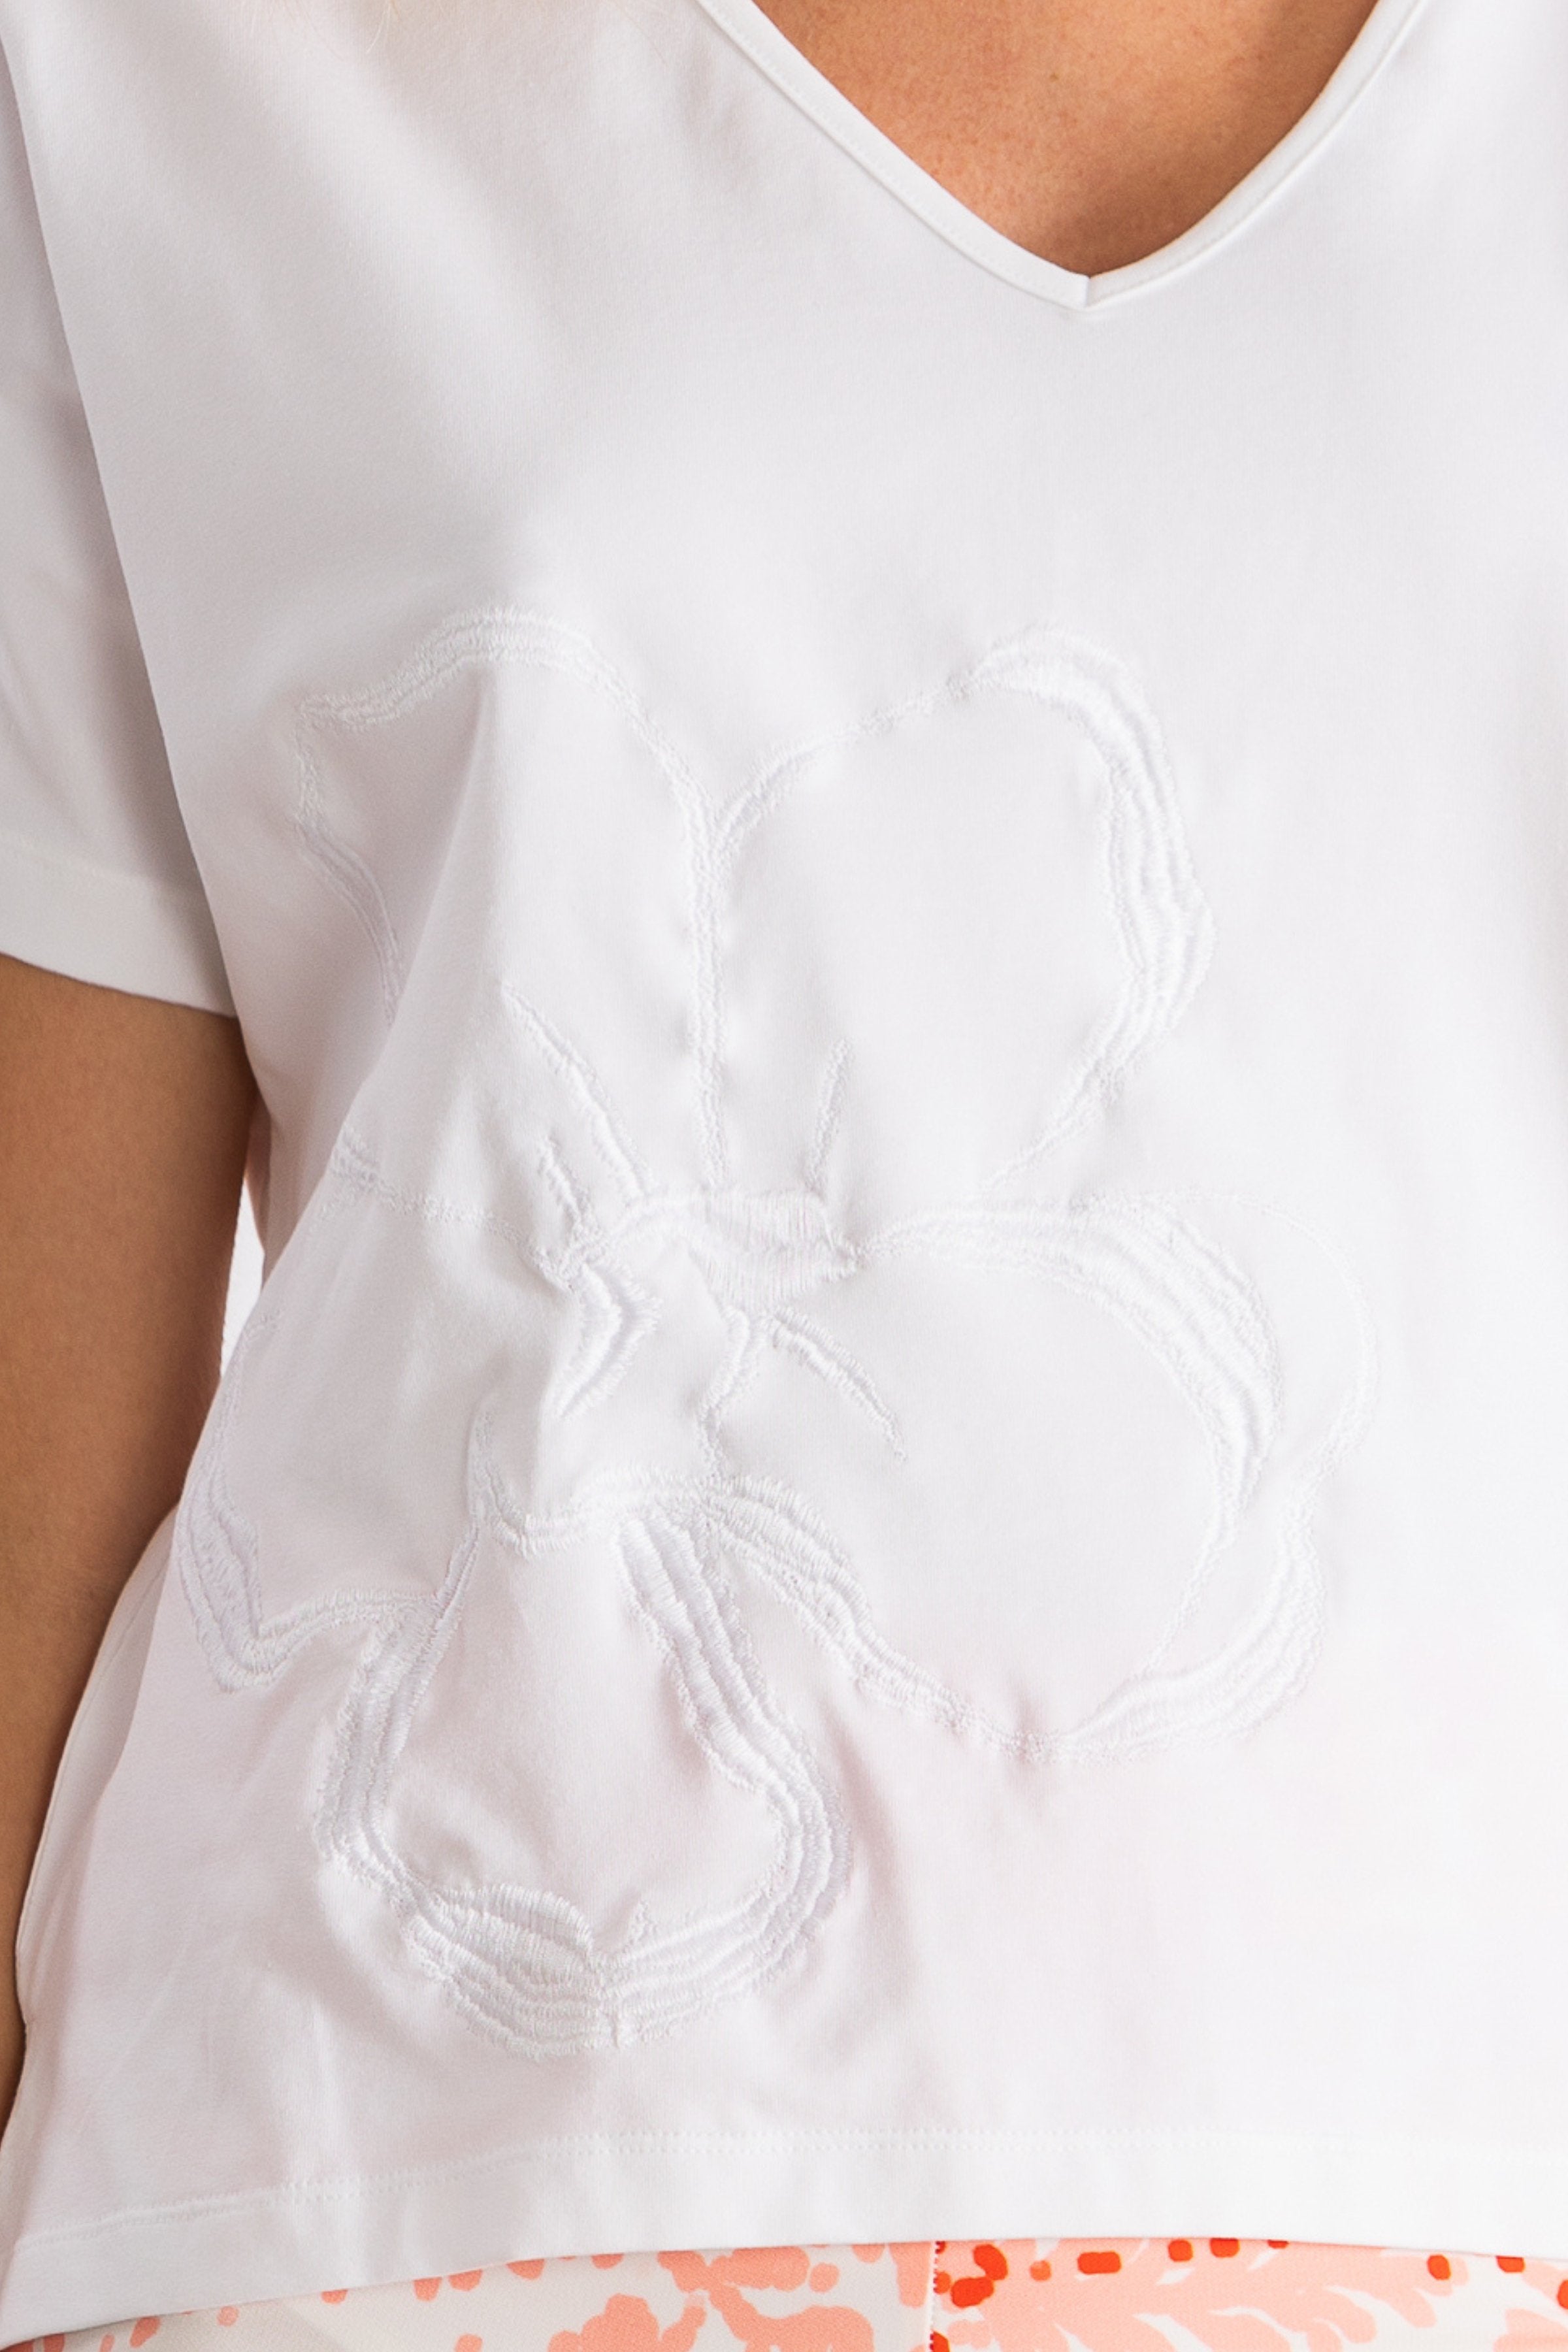 Camiseta blanca con bordado al tono flor LolitasyL - lolitasyl.com